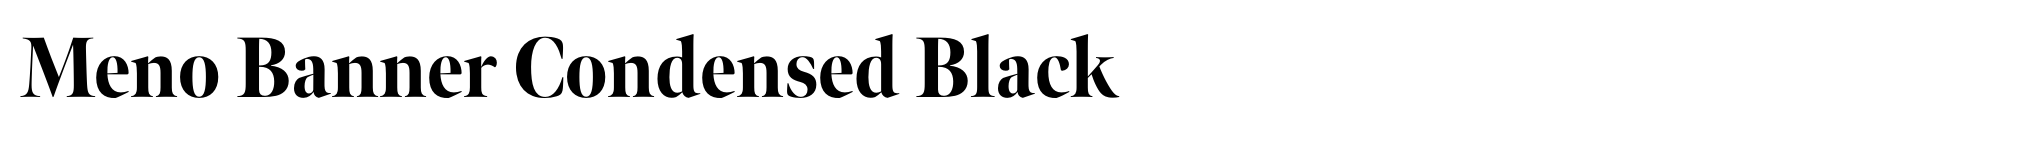 Meno Banner Condensed Black image